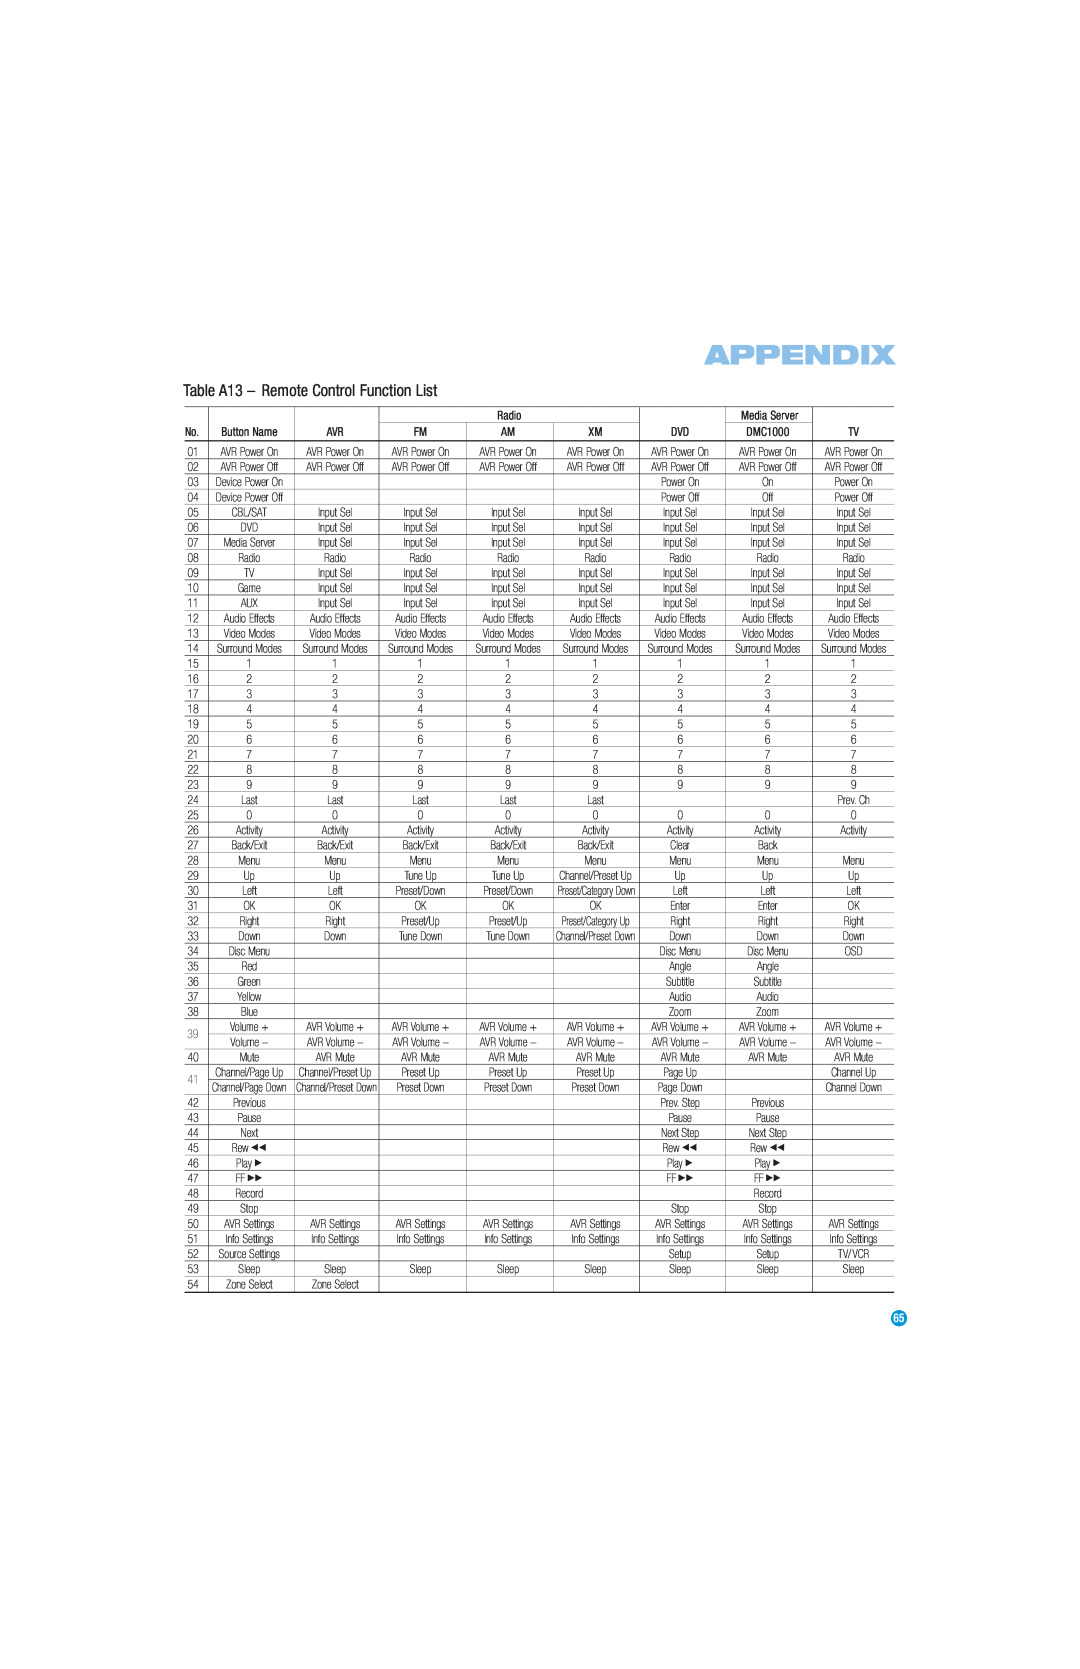 Harman-Kardon AVR 254 owner manual Table A13 - Remote Control Function List, Appendix 